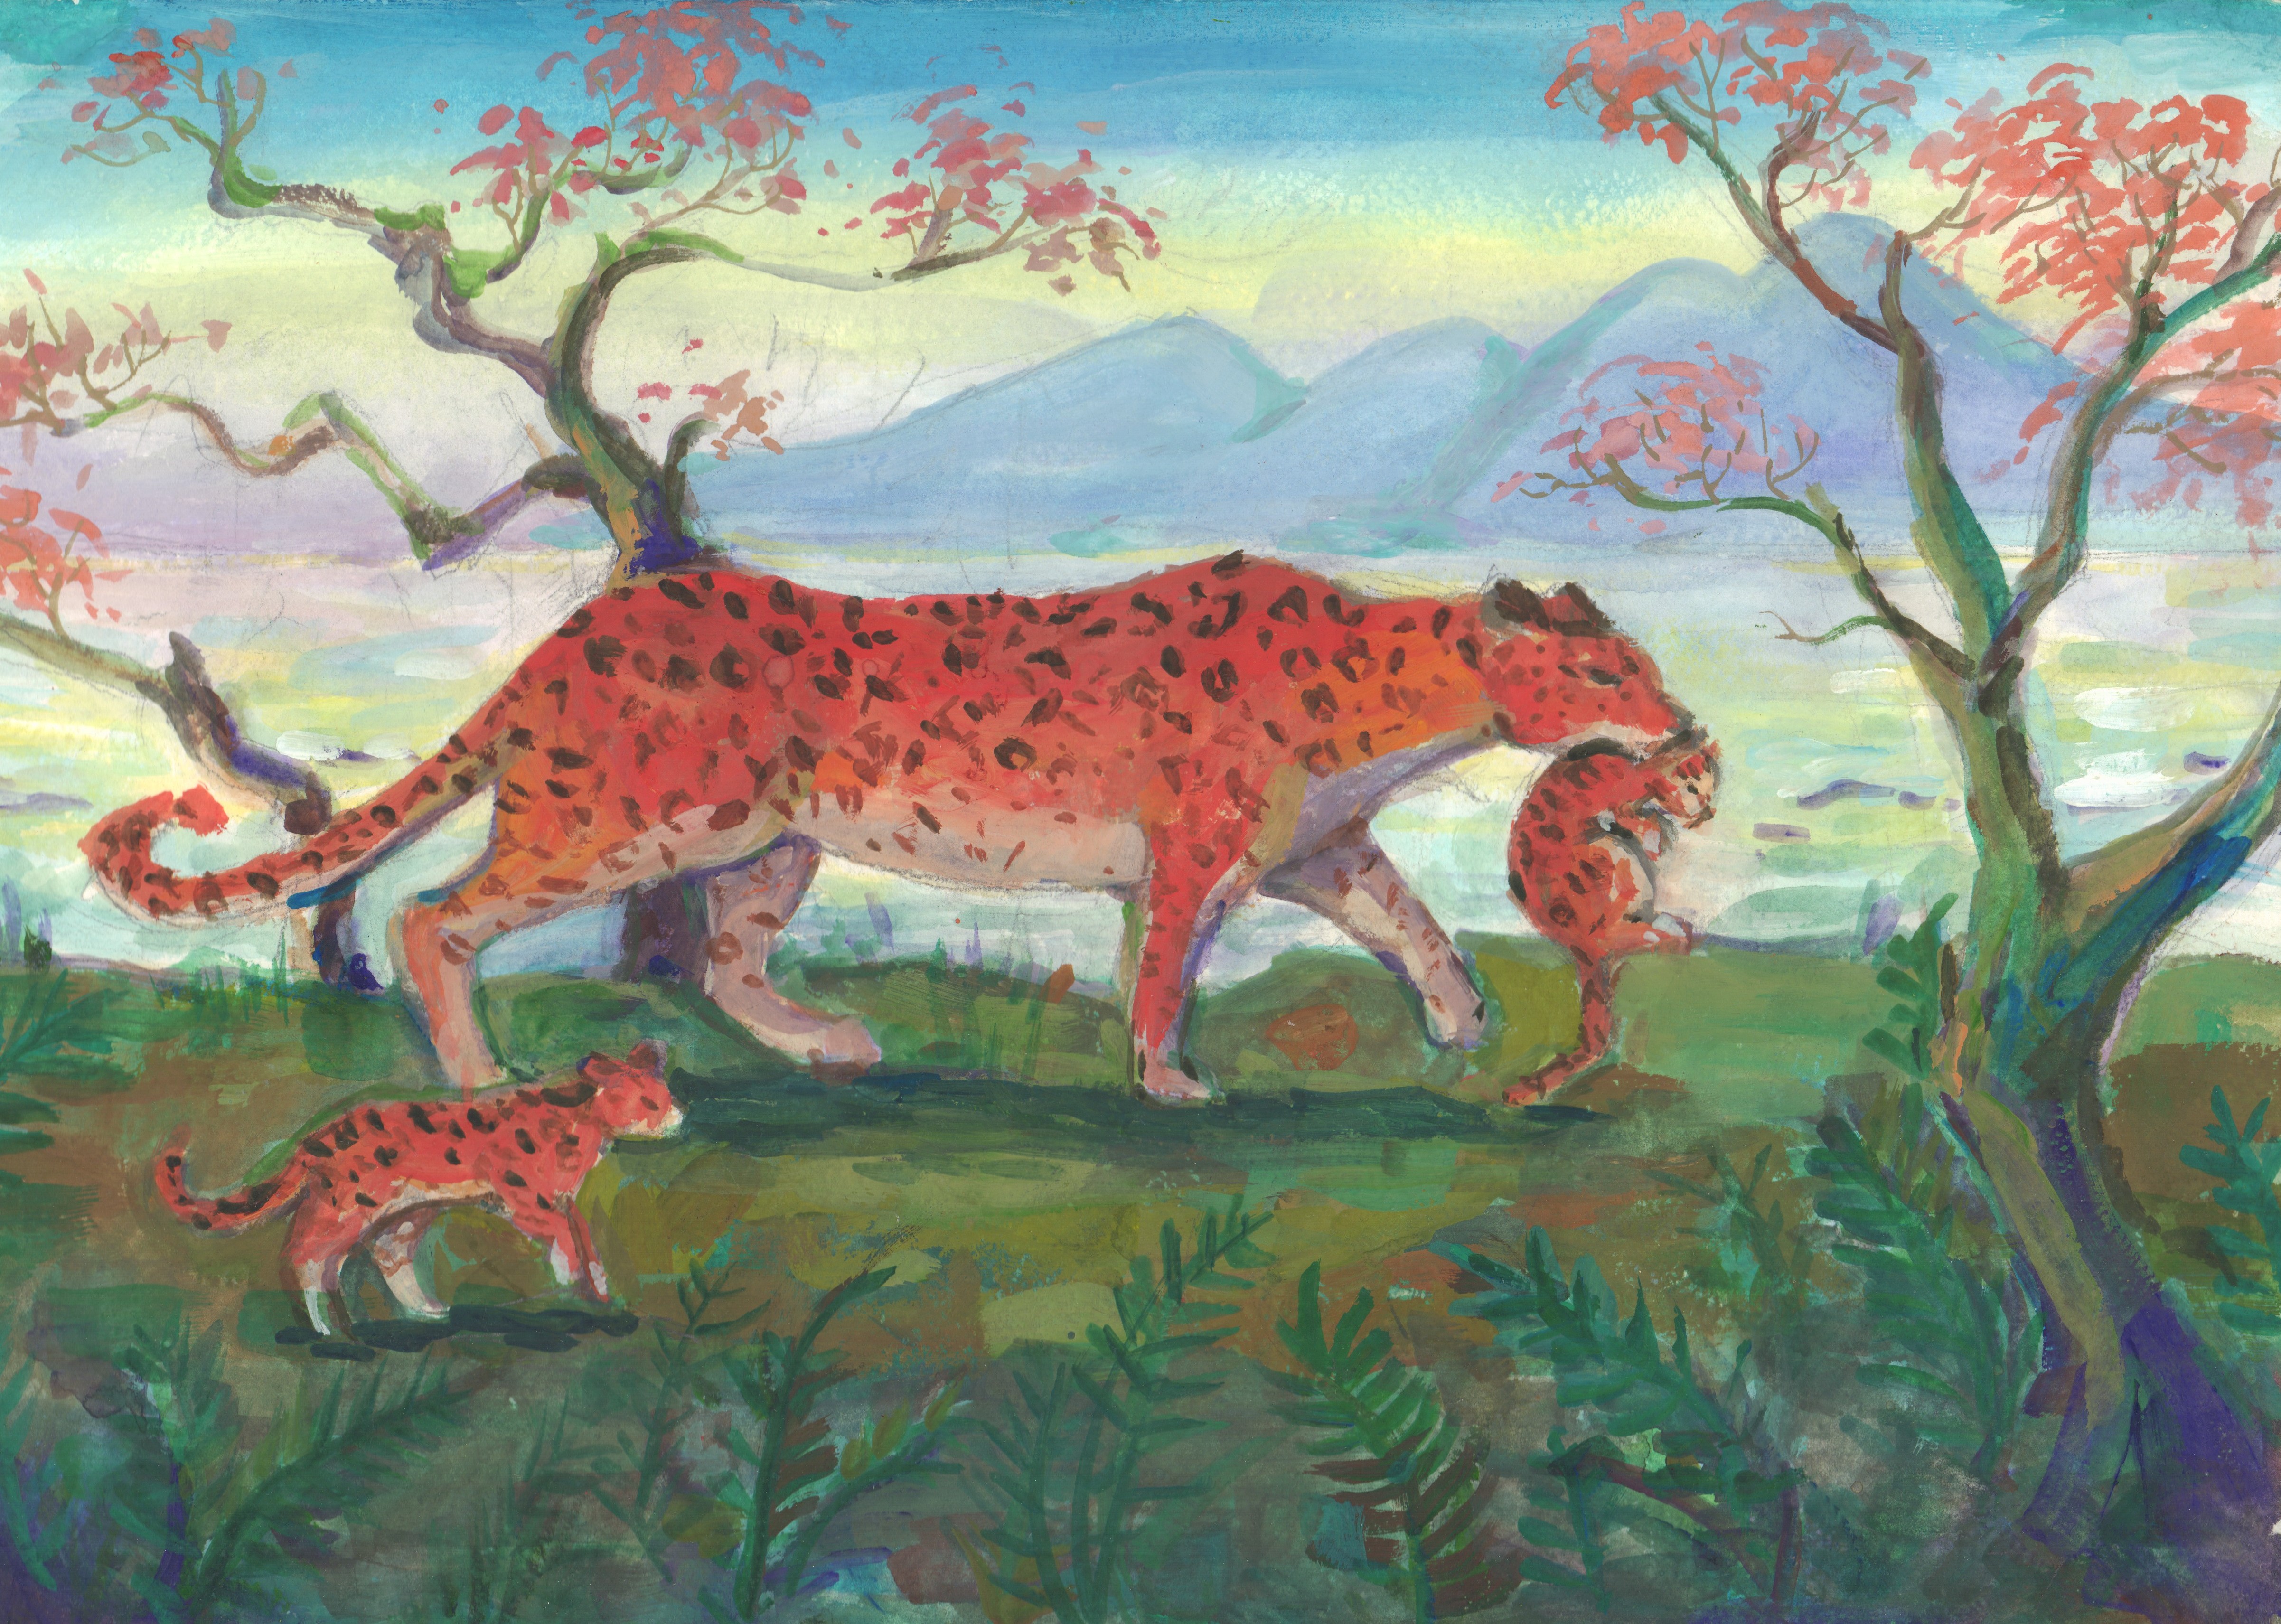 Amur leopard by Anastasia Linnik aged 13 from Vladivostok